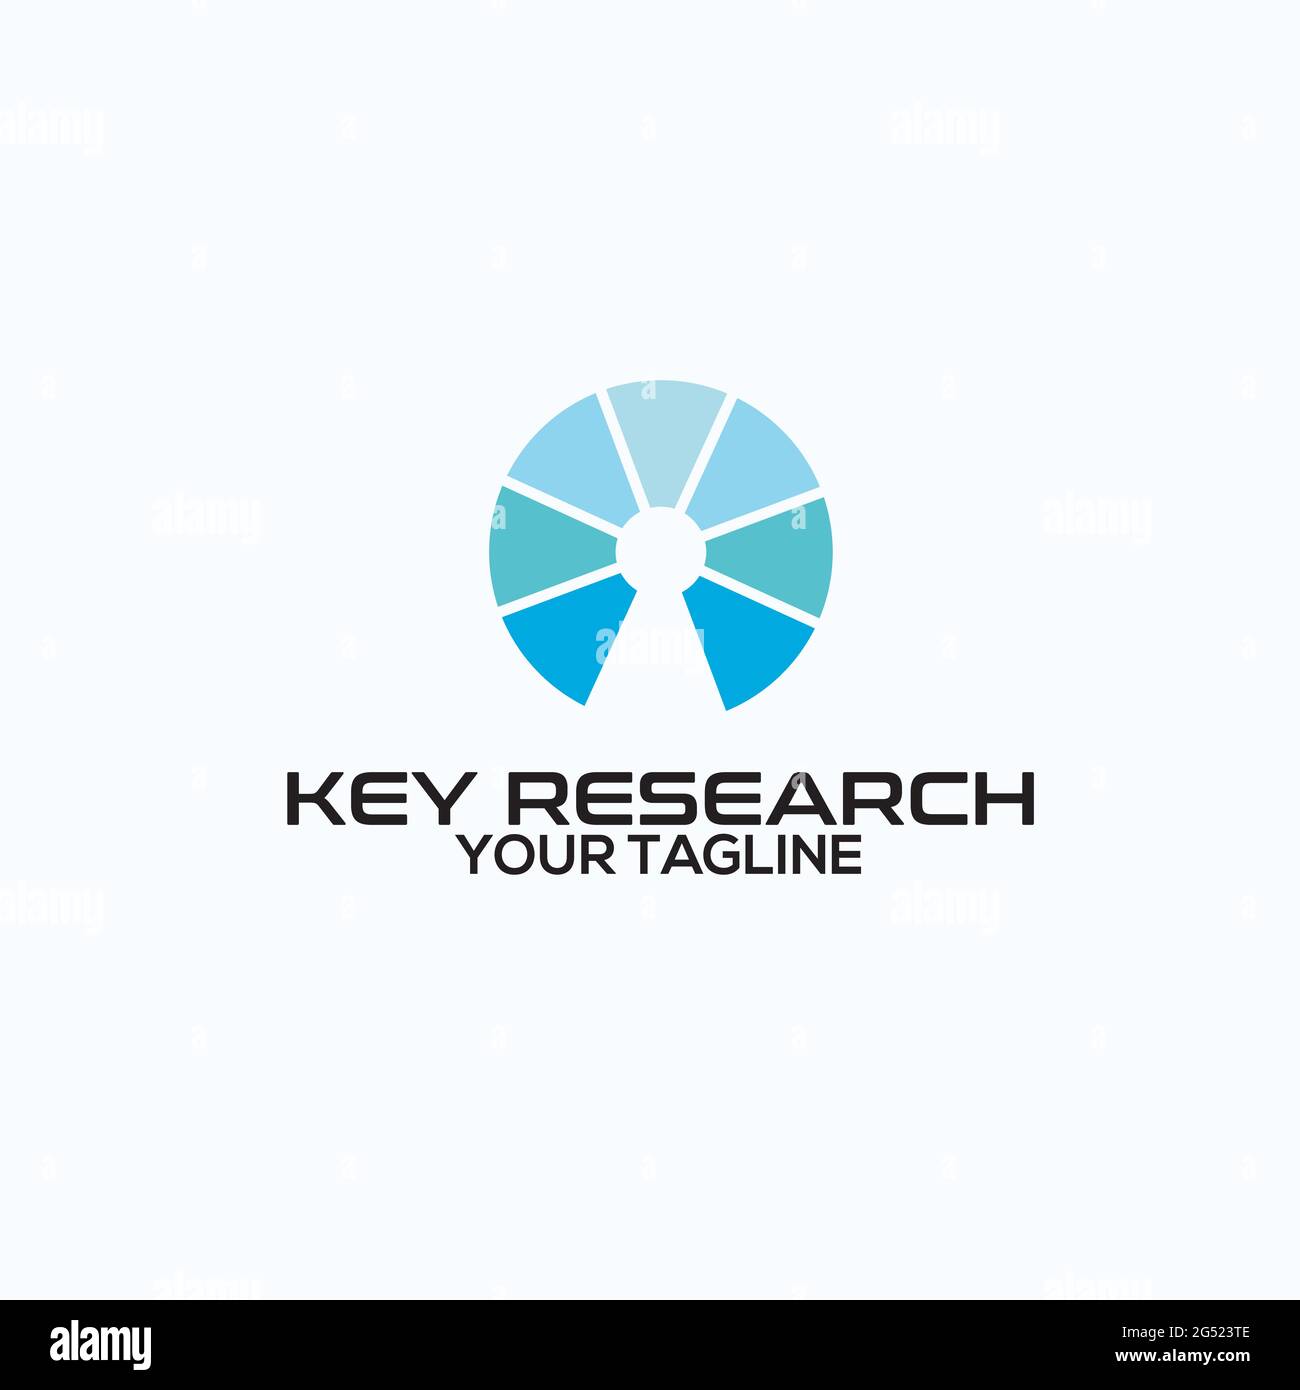 key research exclusive logo design inspiration Stock Vector